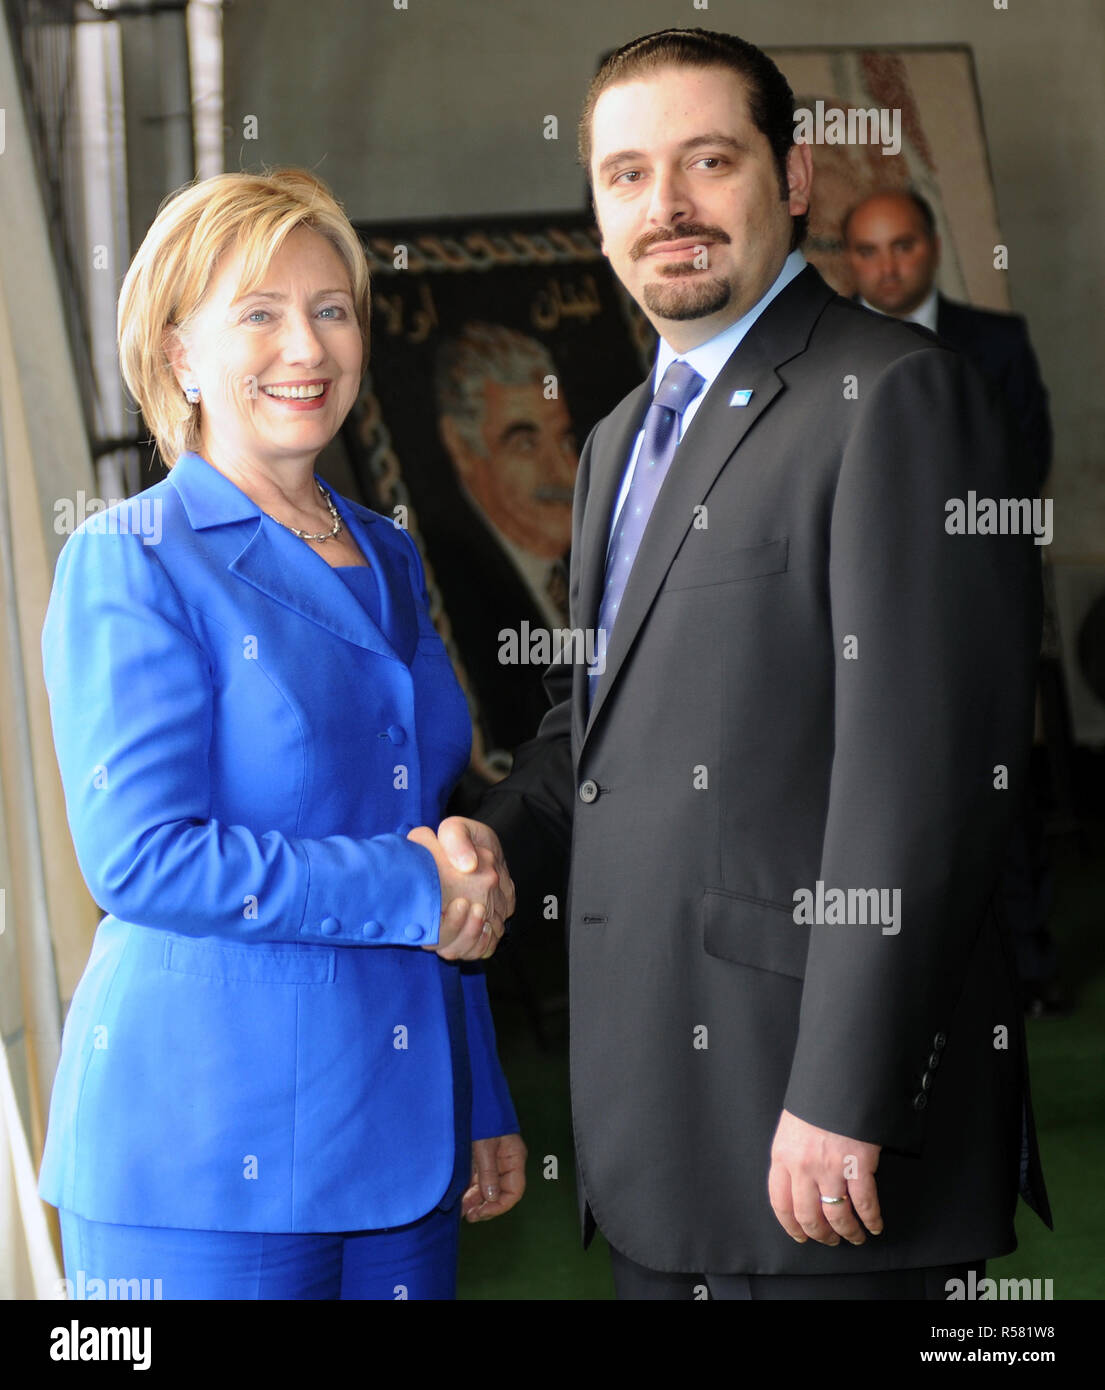 2009 - U.S. Secretary of State Hillary Rodham Clinton with Saad Hariri at the gravesite of former Lebanese Prime Minister Rafic Hariri in Beirut, Lebanon Stock Photo